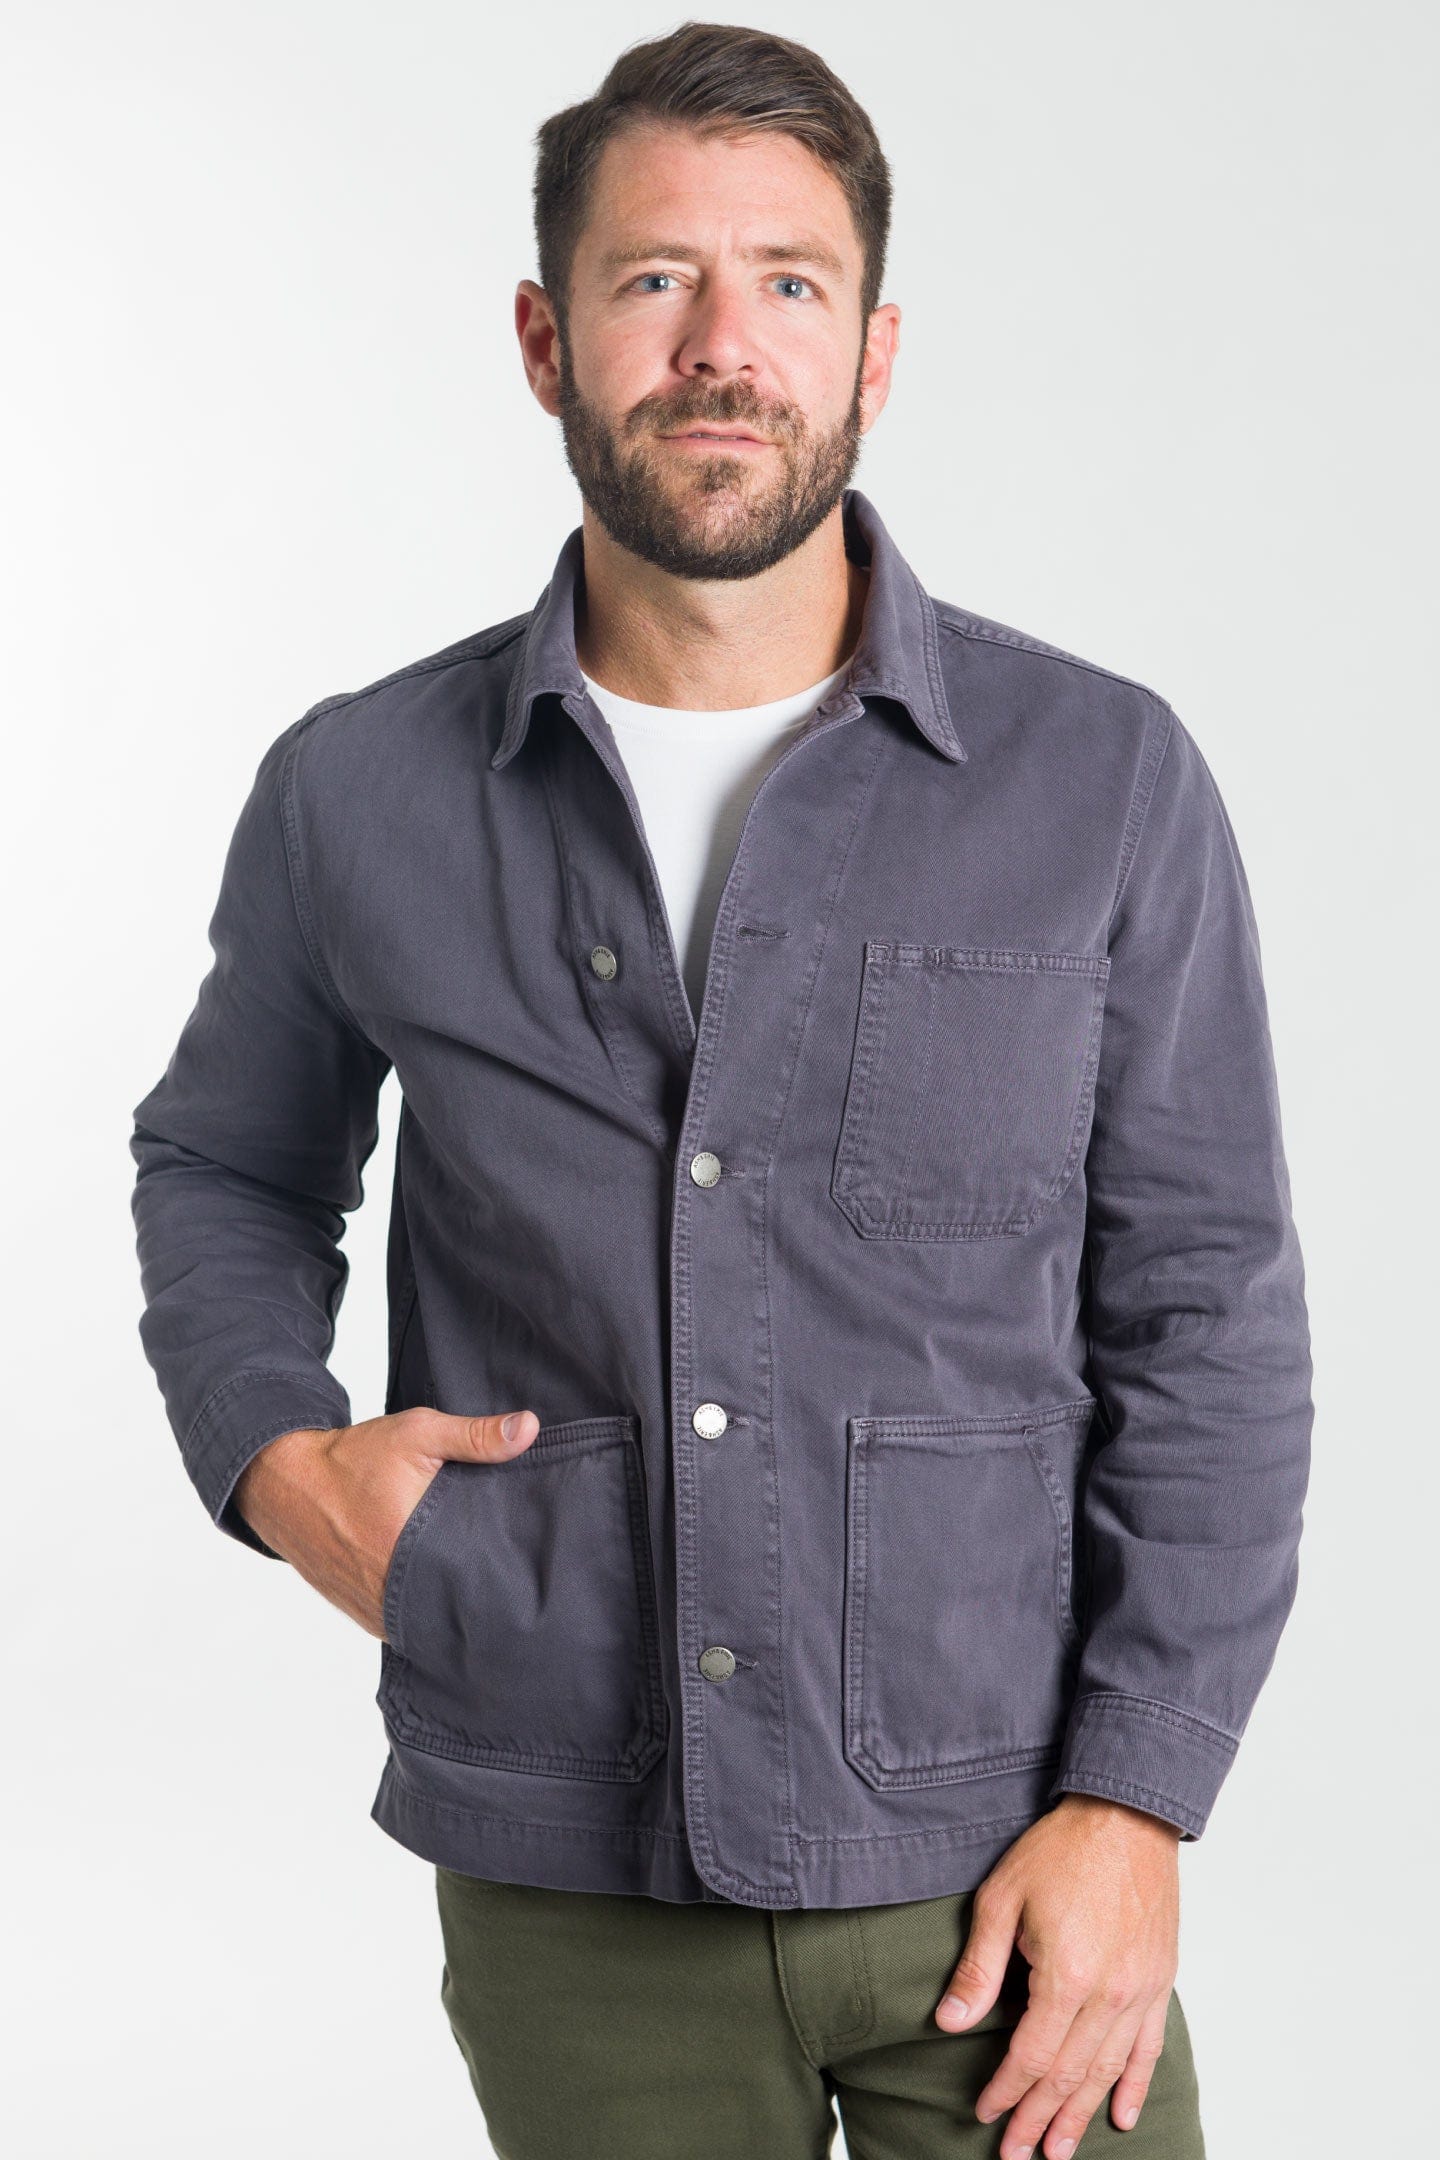 Buy Grey Harrington Jacket for Short Men | Ash & Erie   Harrington Jacket